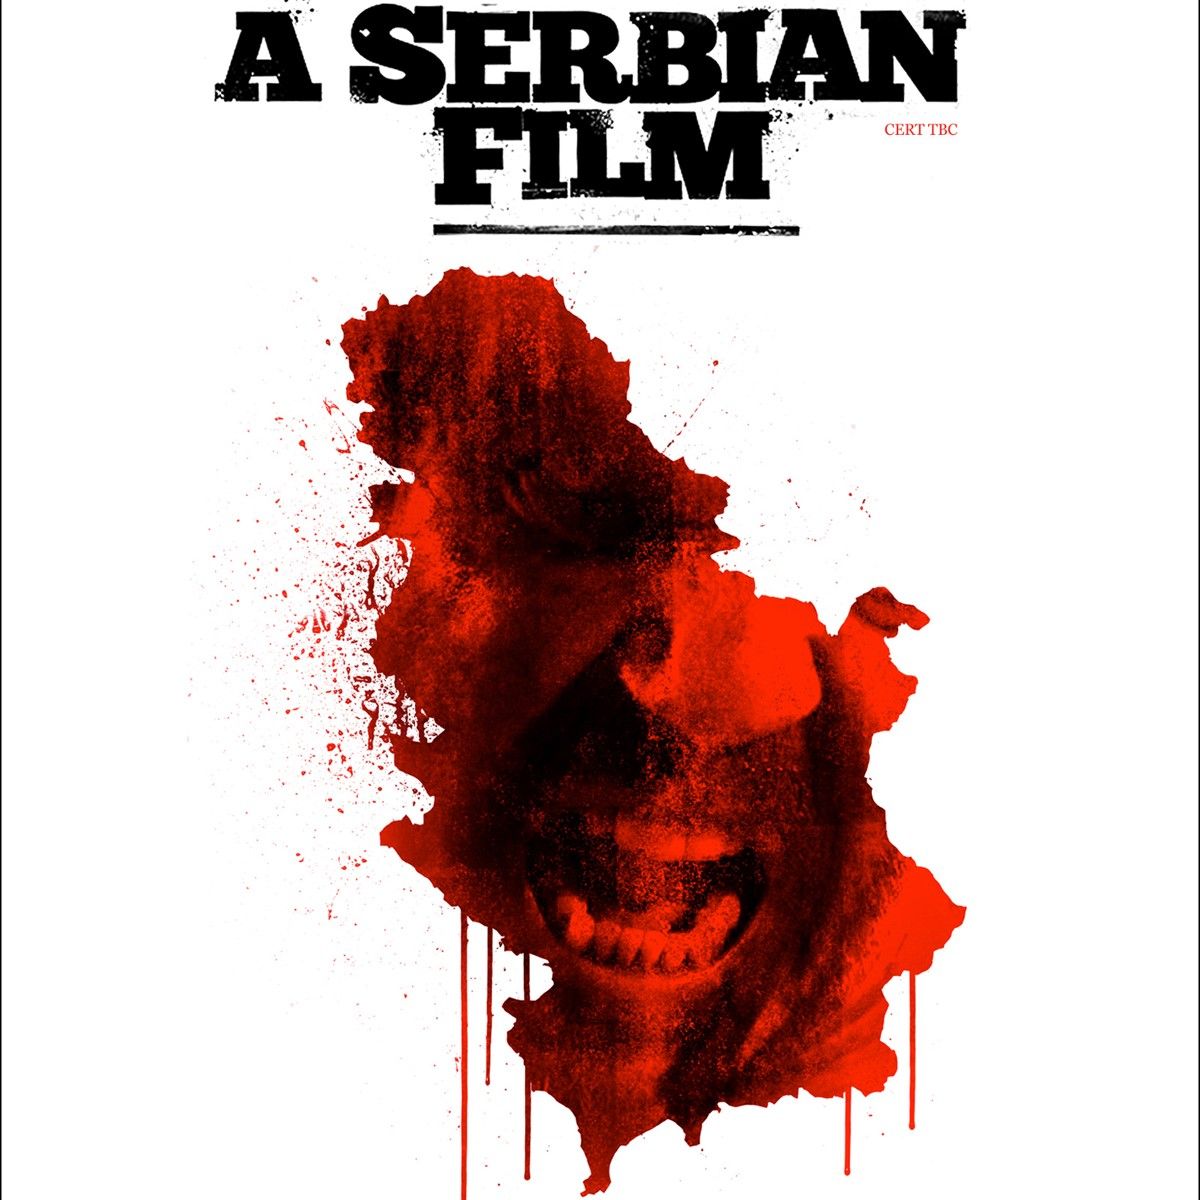 A serbian film soundtrack